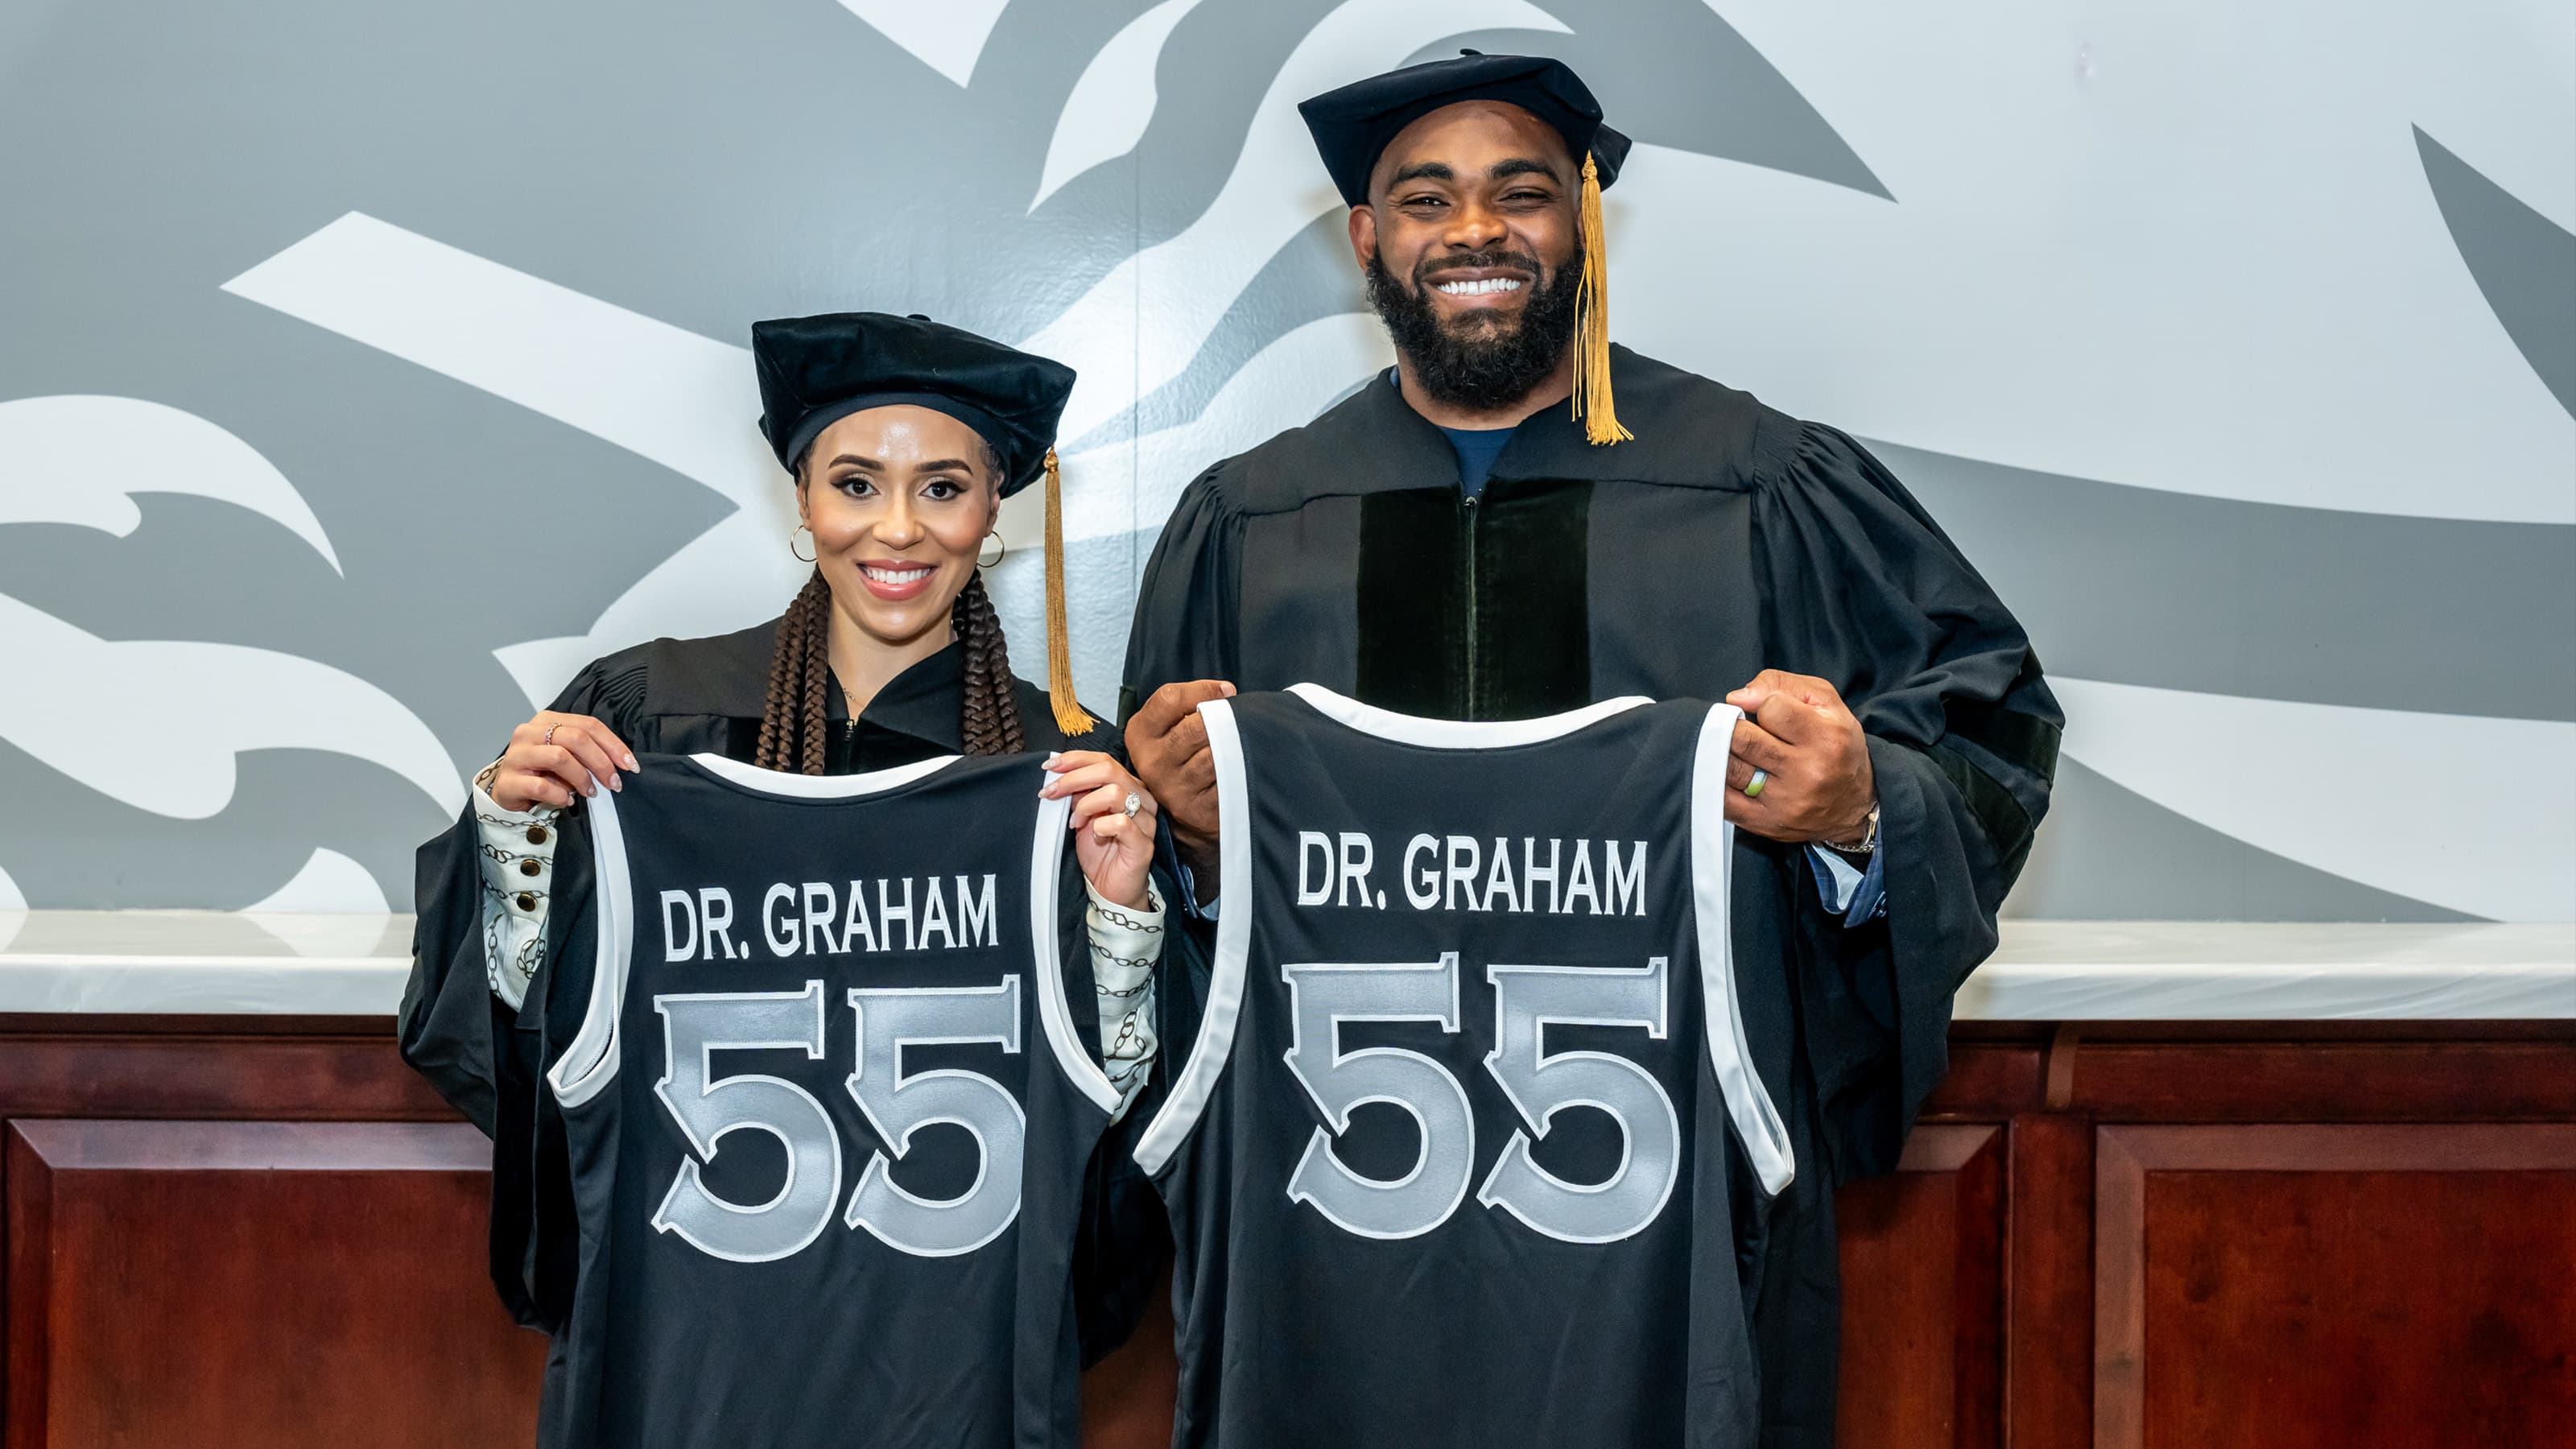 Carlyne and Brandon Graham in regalia holding "Dr. Graham" jerseys